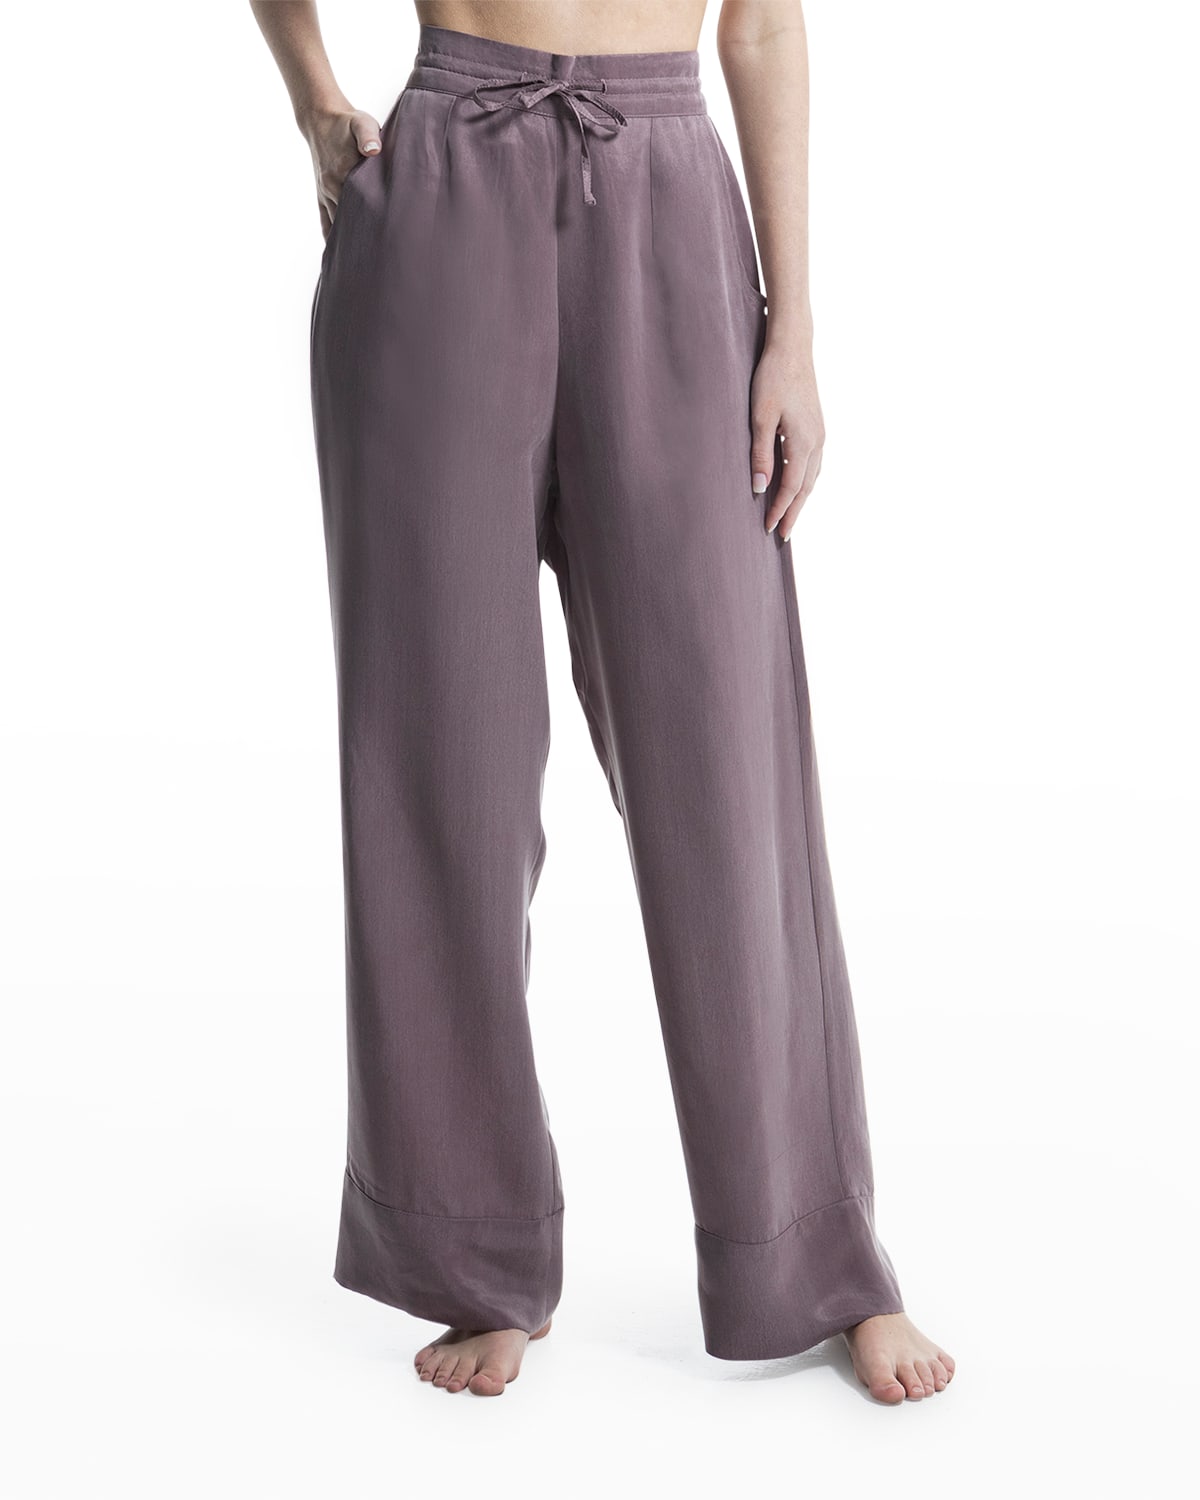 NWT XL 16/18 or L 14/16 Eileen Fisher Mandarin Pajamas Gray White Piping